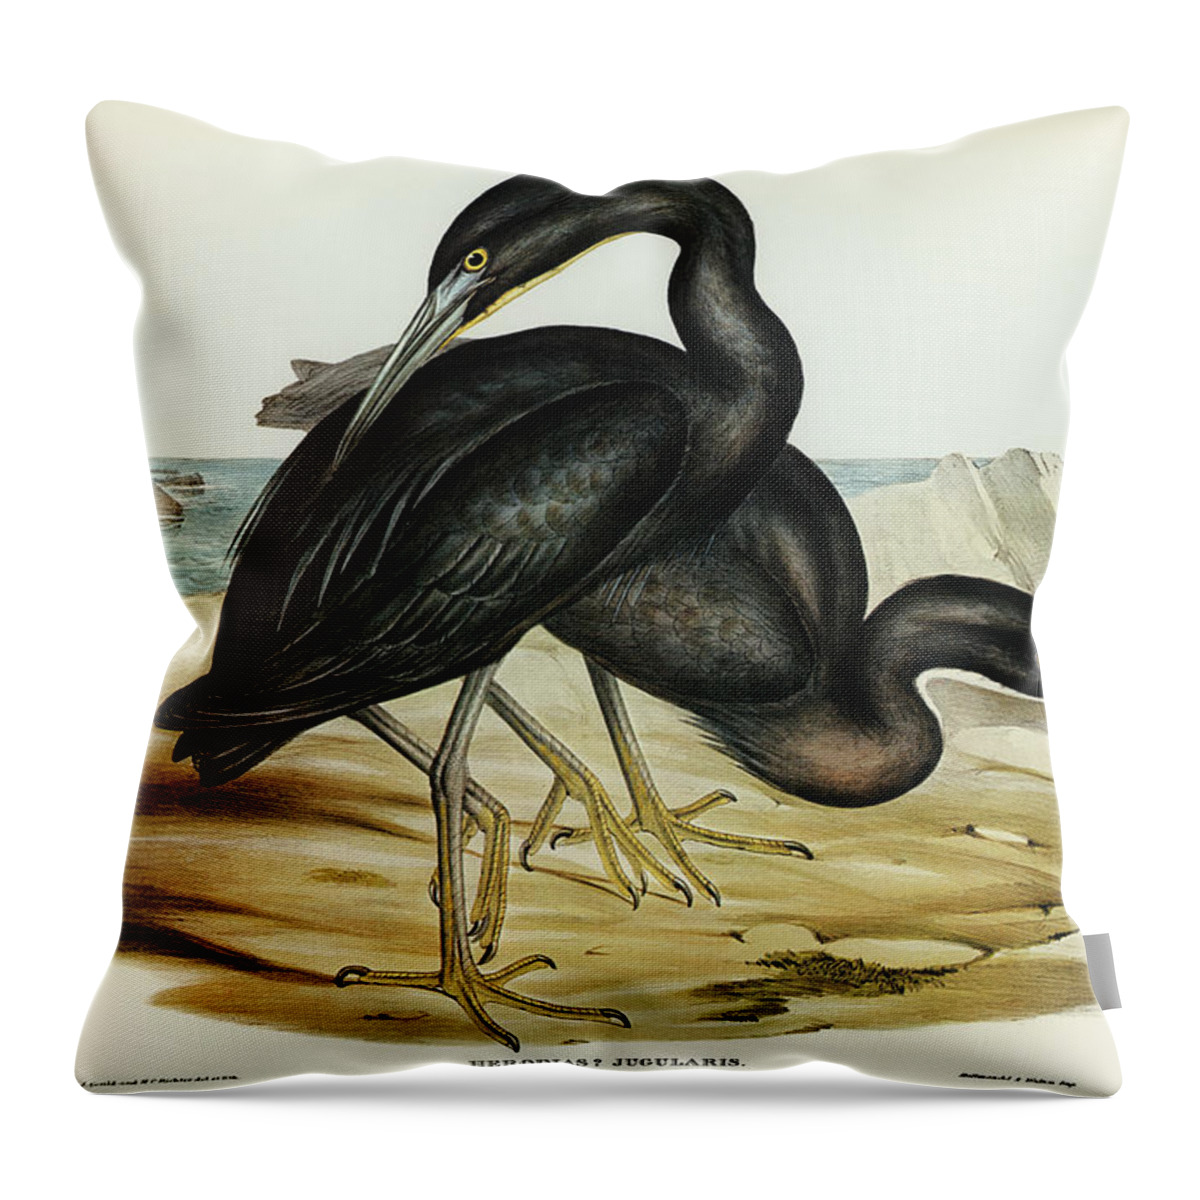 Blue Reef Heron Throw Pillow featuring the drawing Blue Reef Heron, Herodias jugularis by John Gould